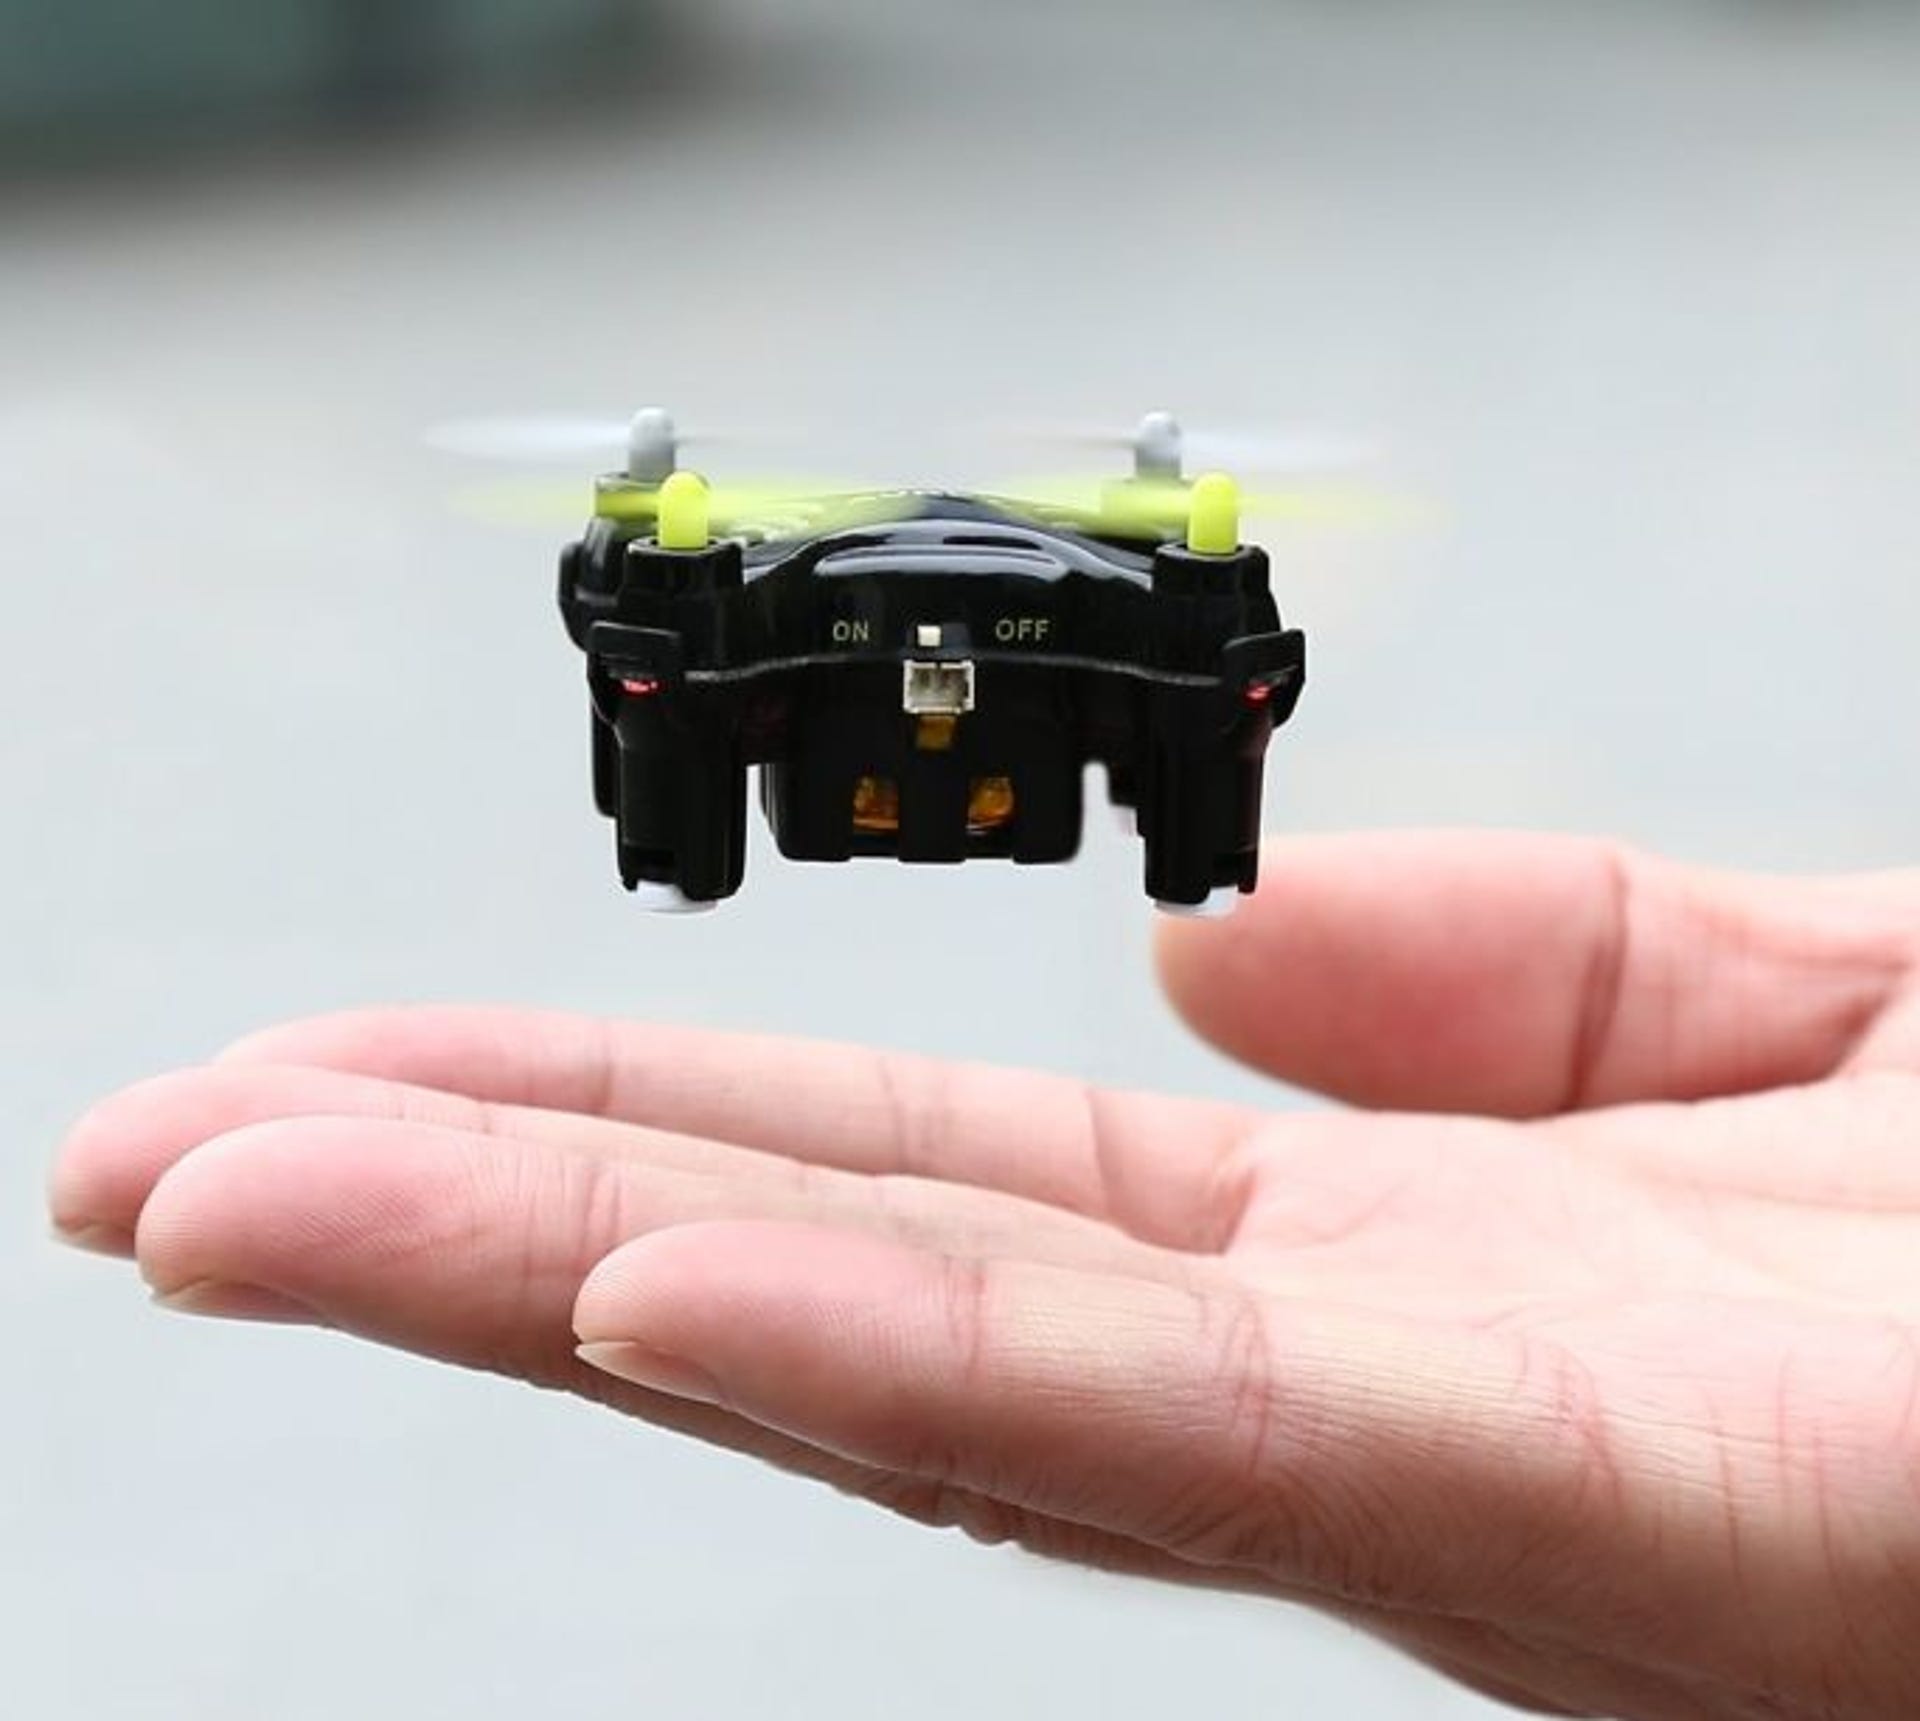 aukey-mini-drone-flying-over-hand.jpg